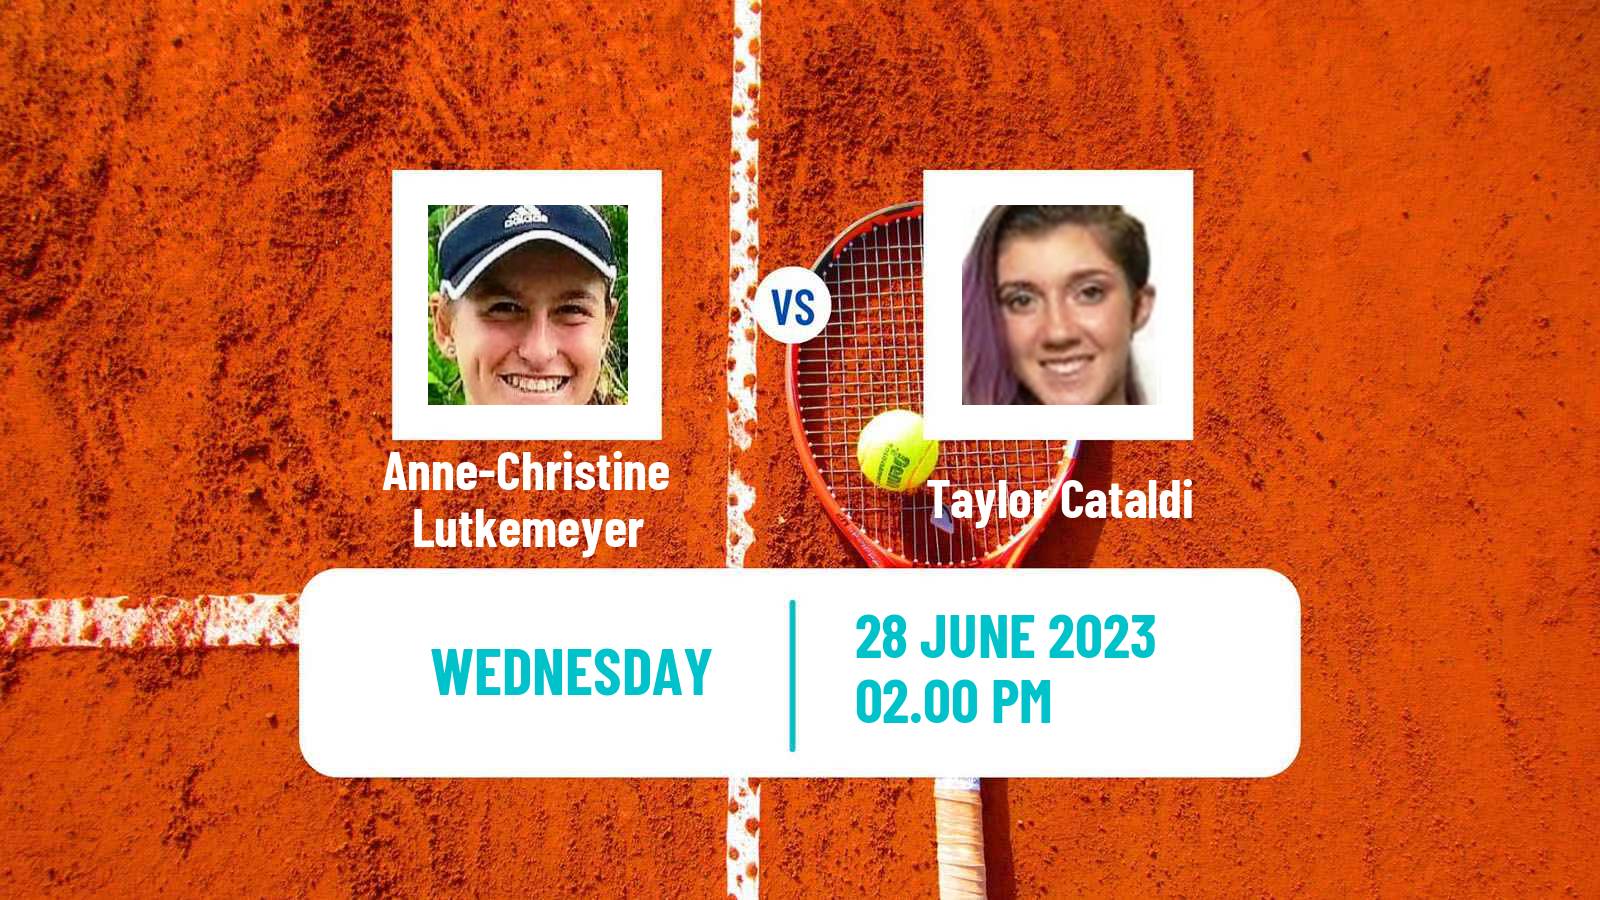 Tennis ITF W15 Irvine Ca Women Anne-Christine Lutkemeyer - Taylor Cataldi